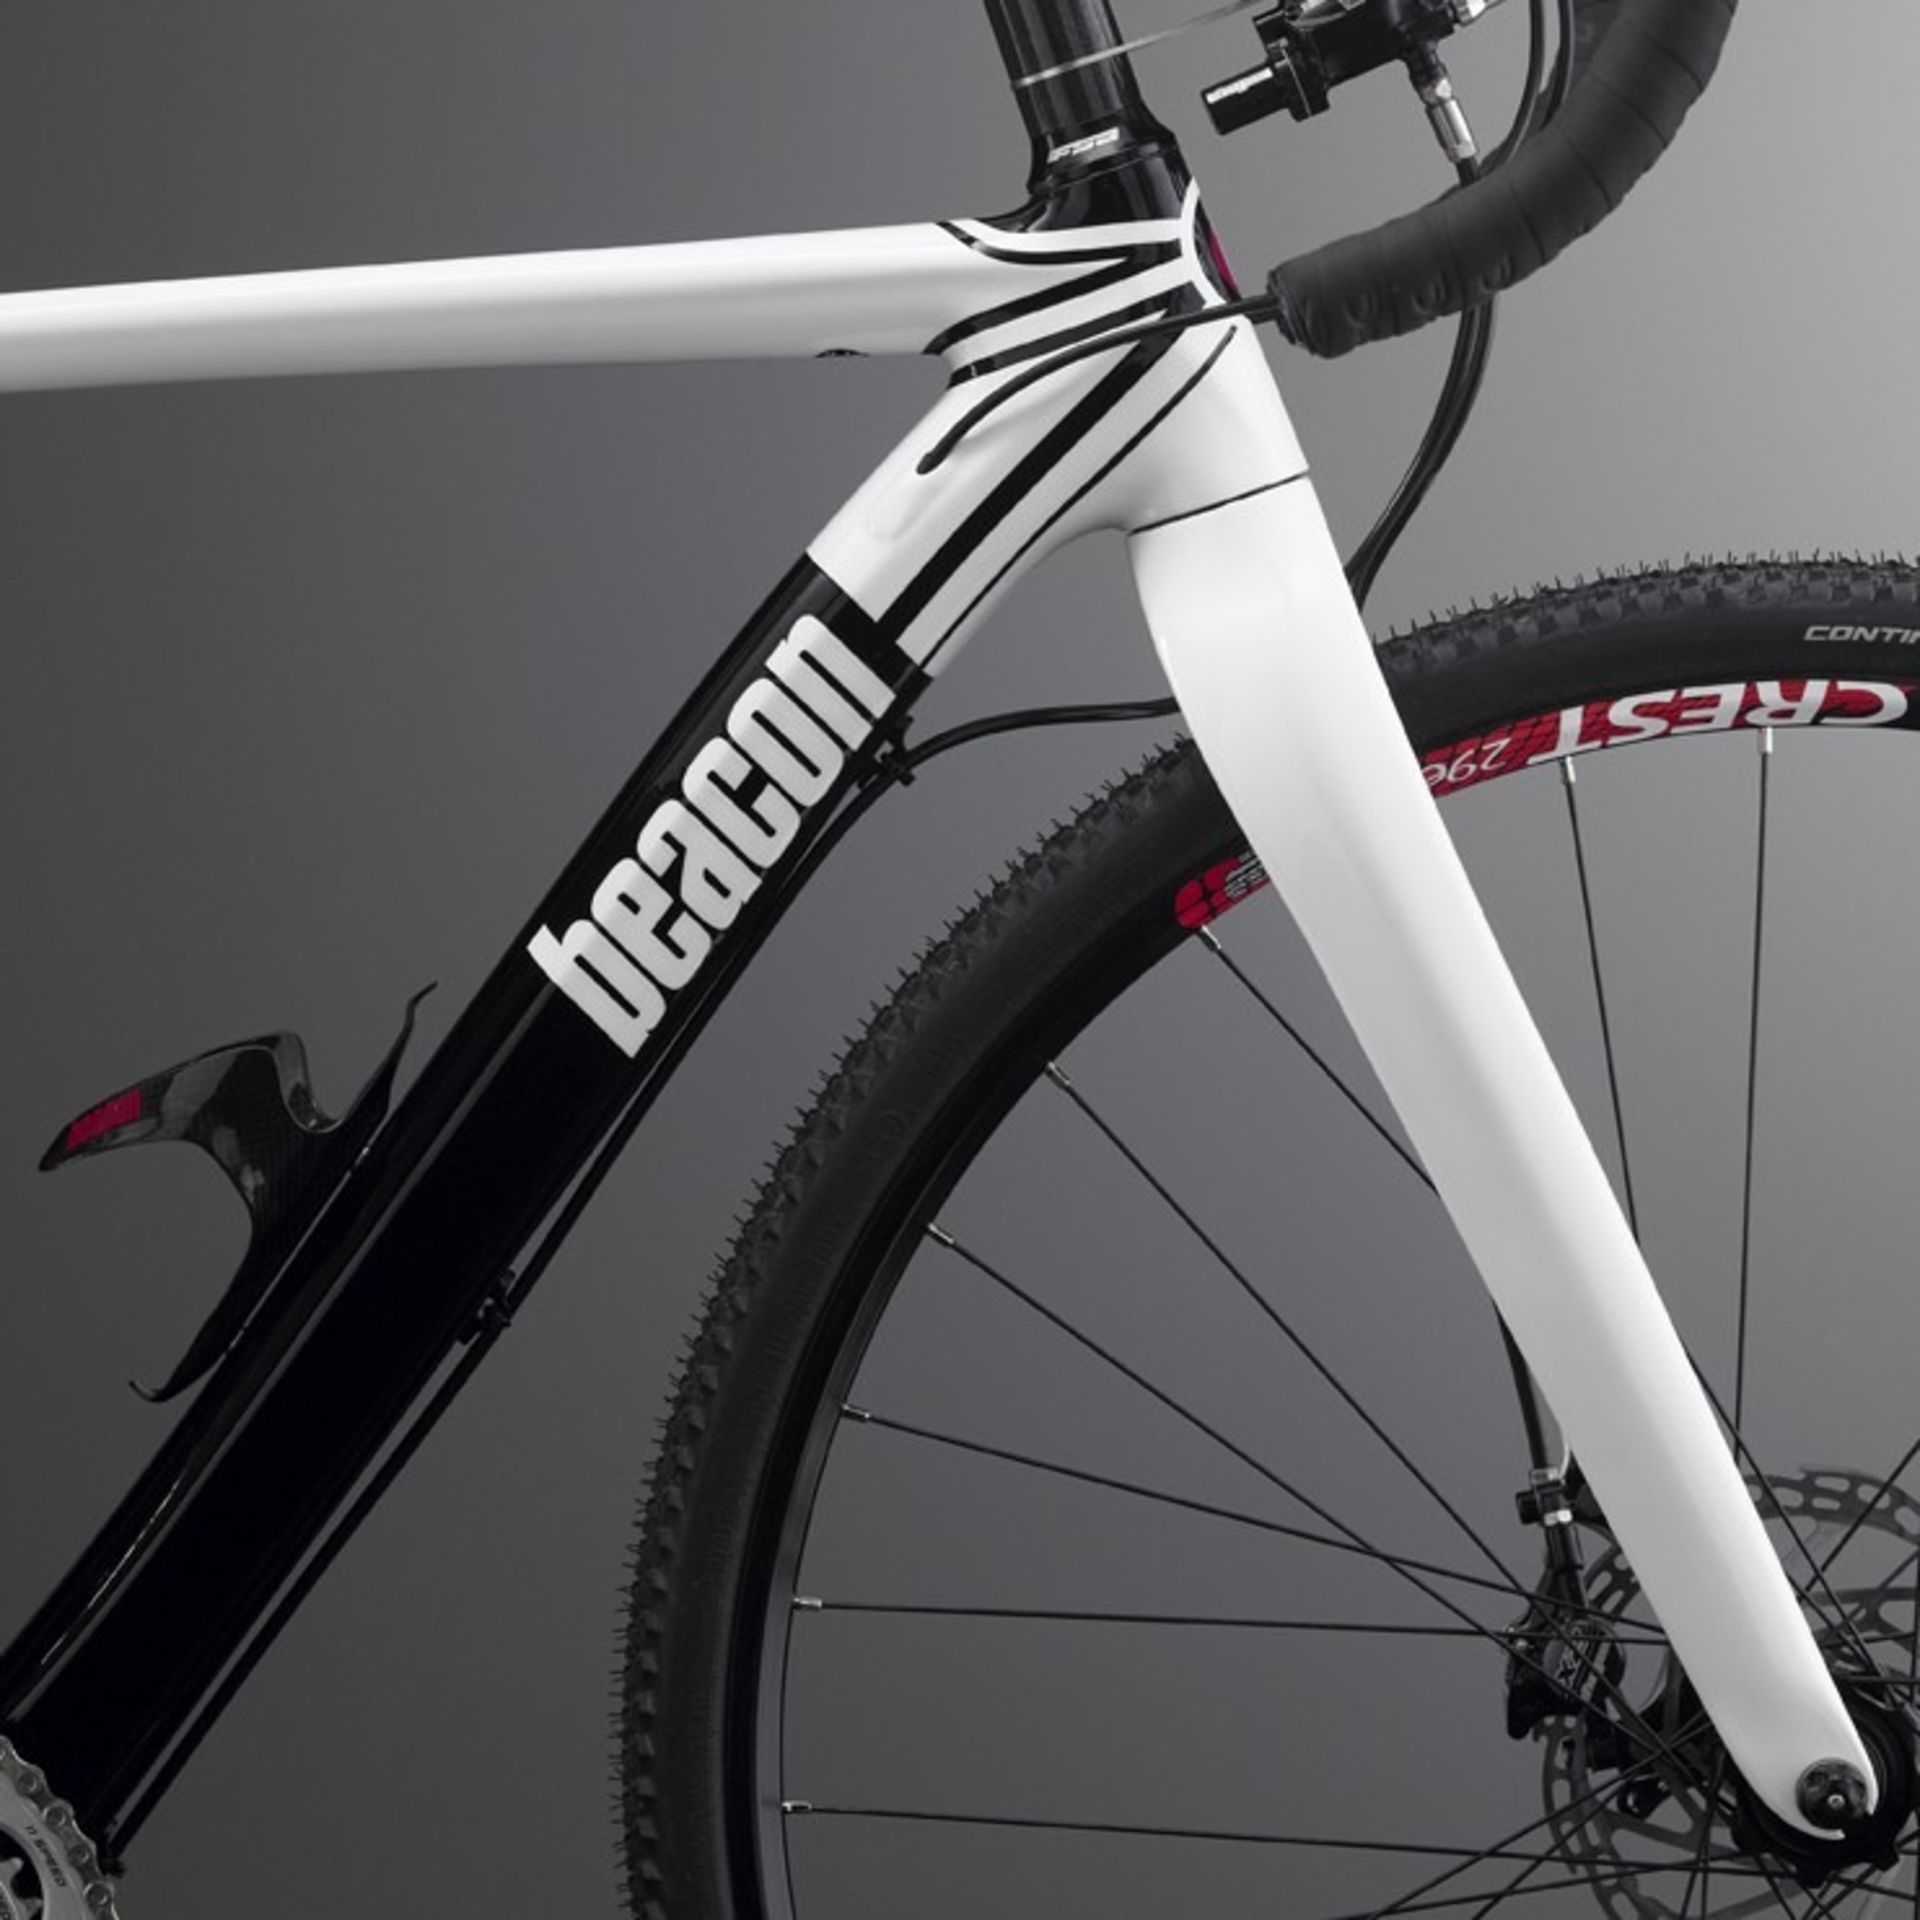 1 x Beacon Model BF-45, Size 560, Carbon Fibre Bike Frame in Black & White. - Image 3 of 3